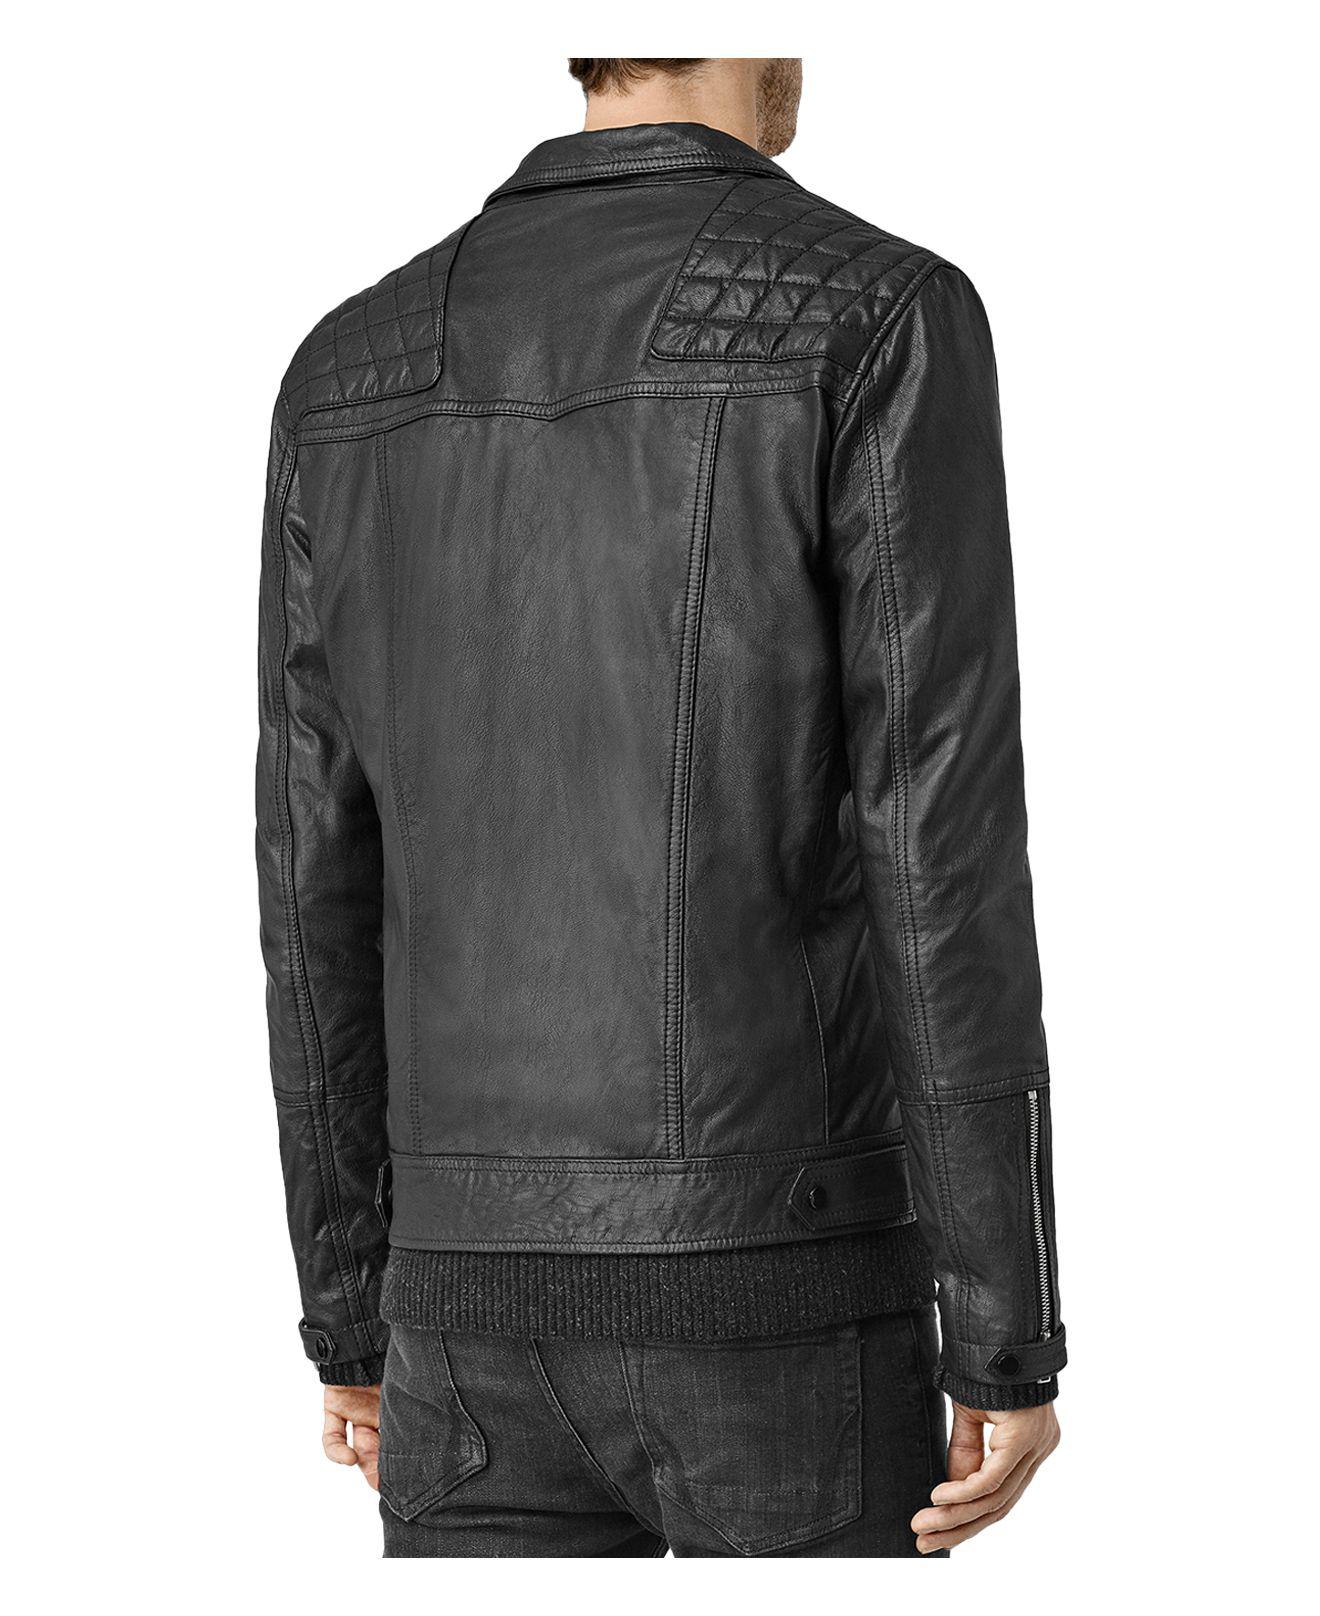 AllSaints Kushiro Leather Slim Fit Moto Jacket in Black for Men - Lyst